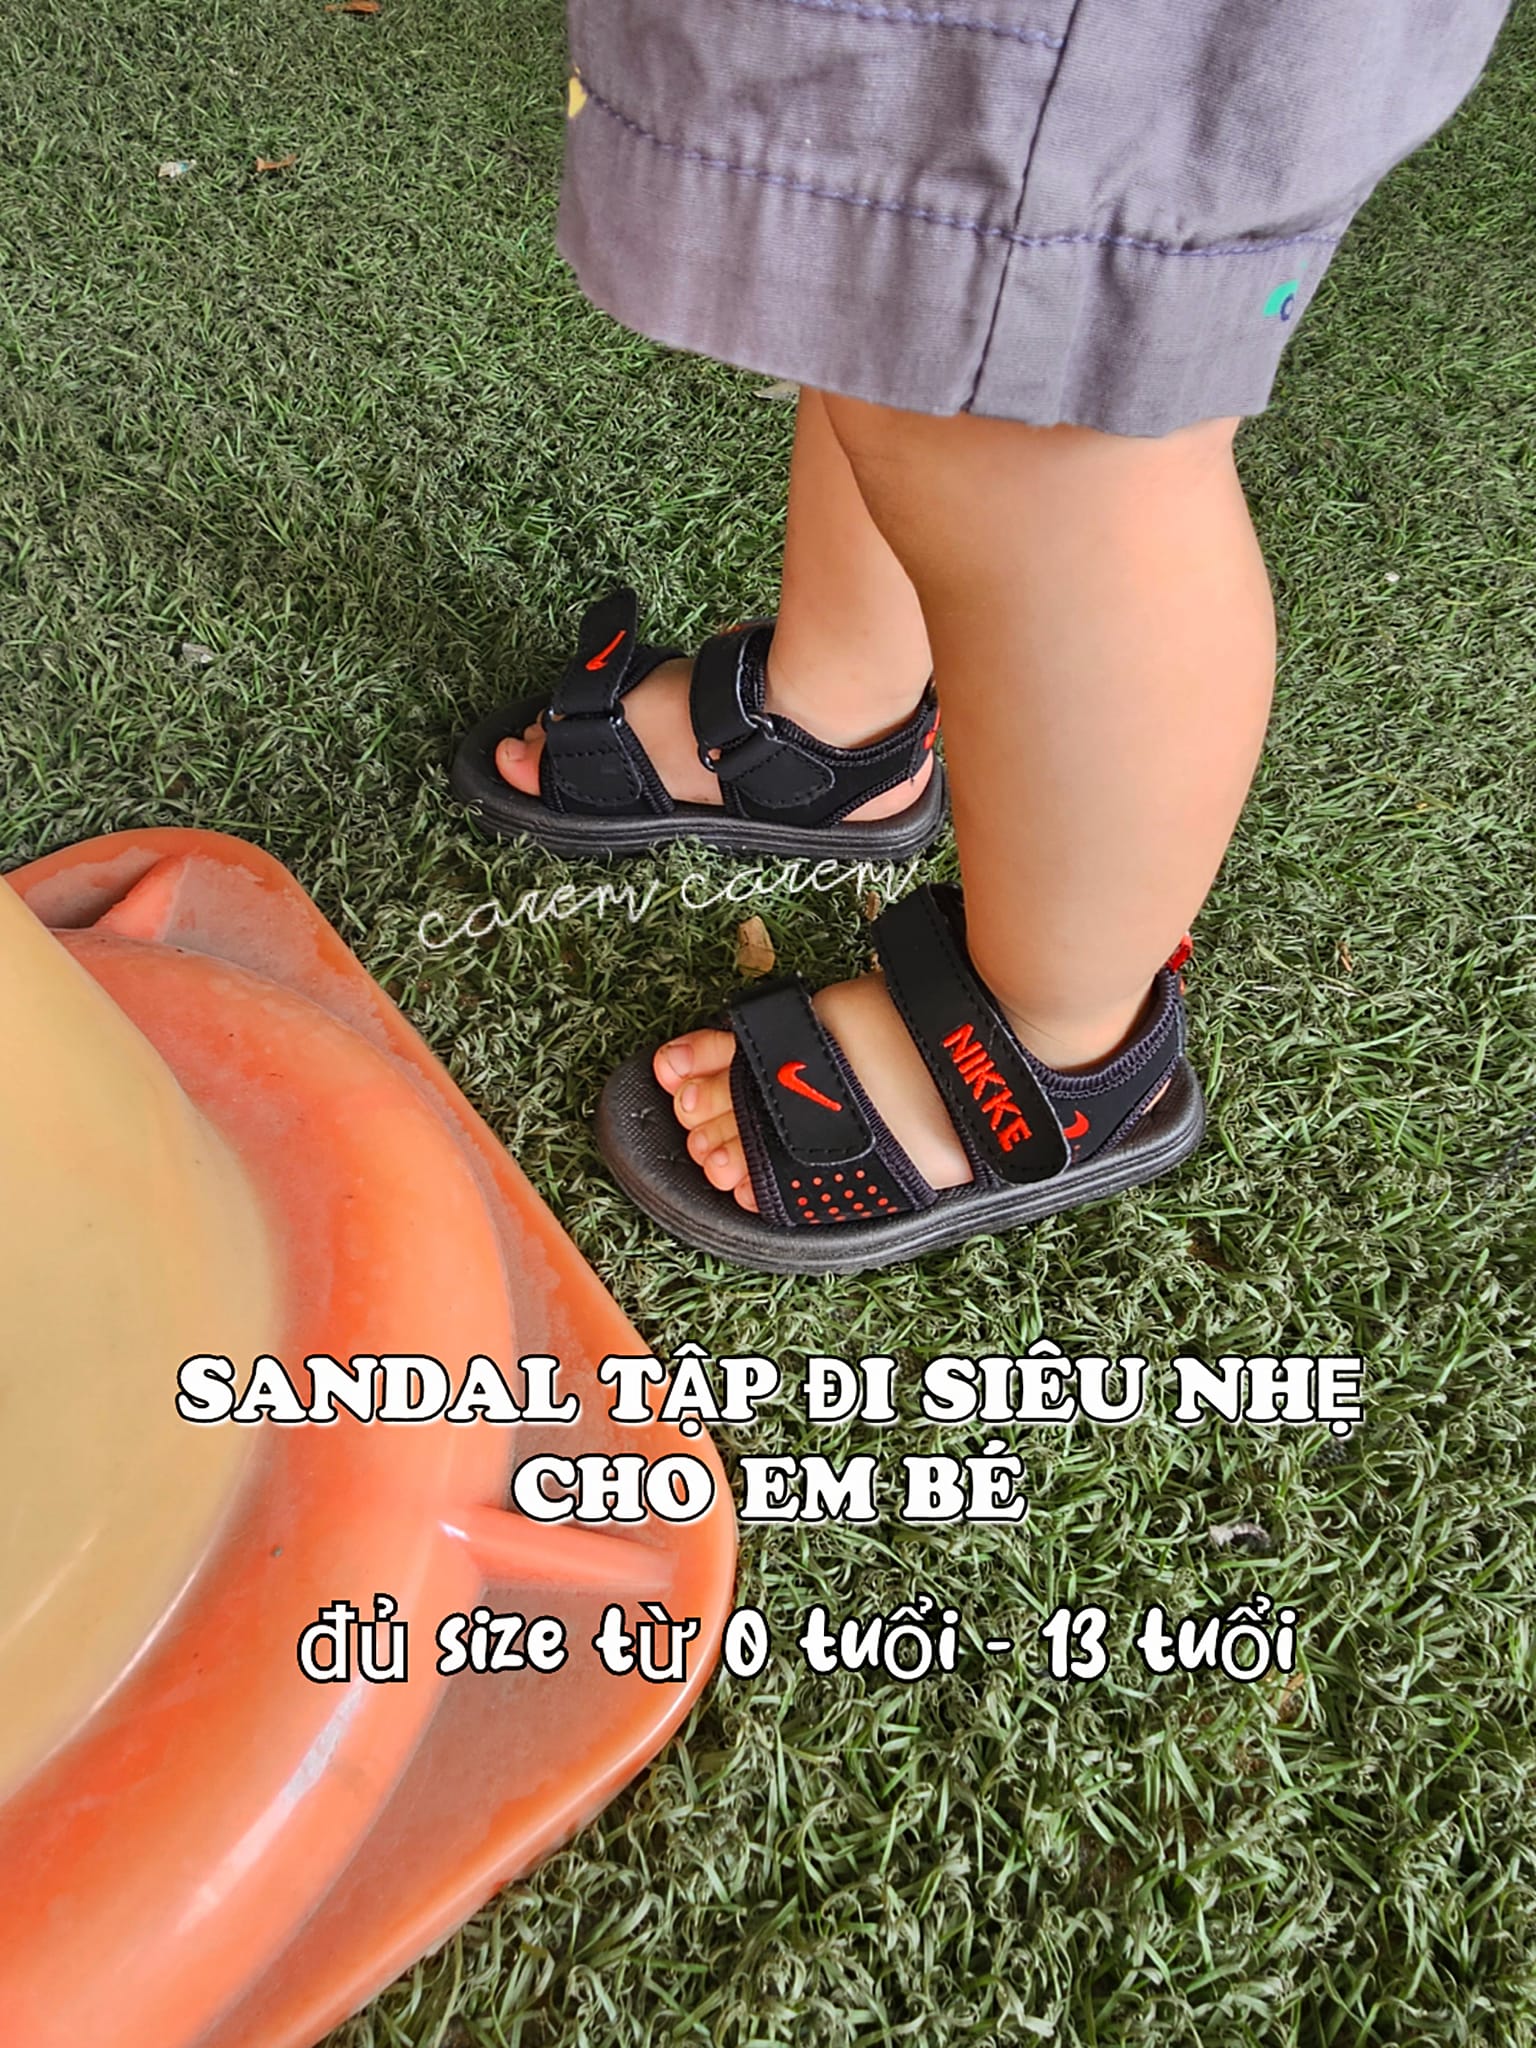 Giày sandal siêu nhẹ cho bé trai bé gái by caremcarem